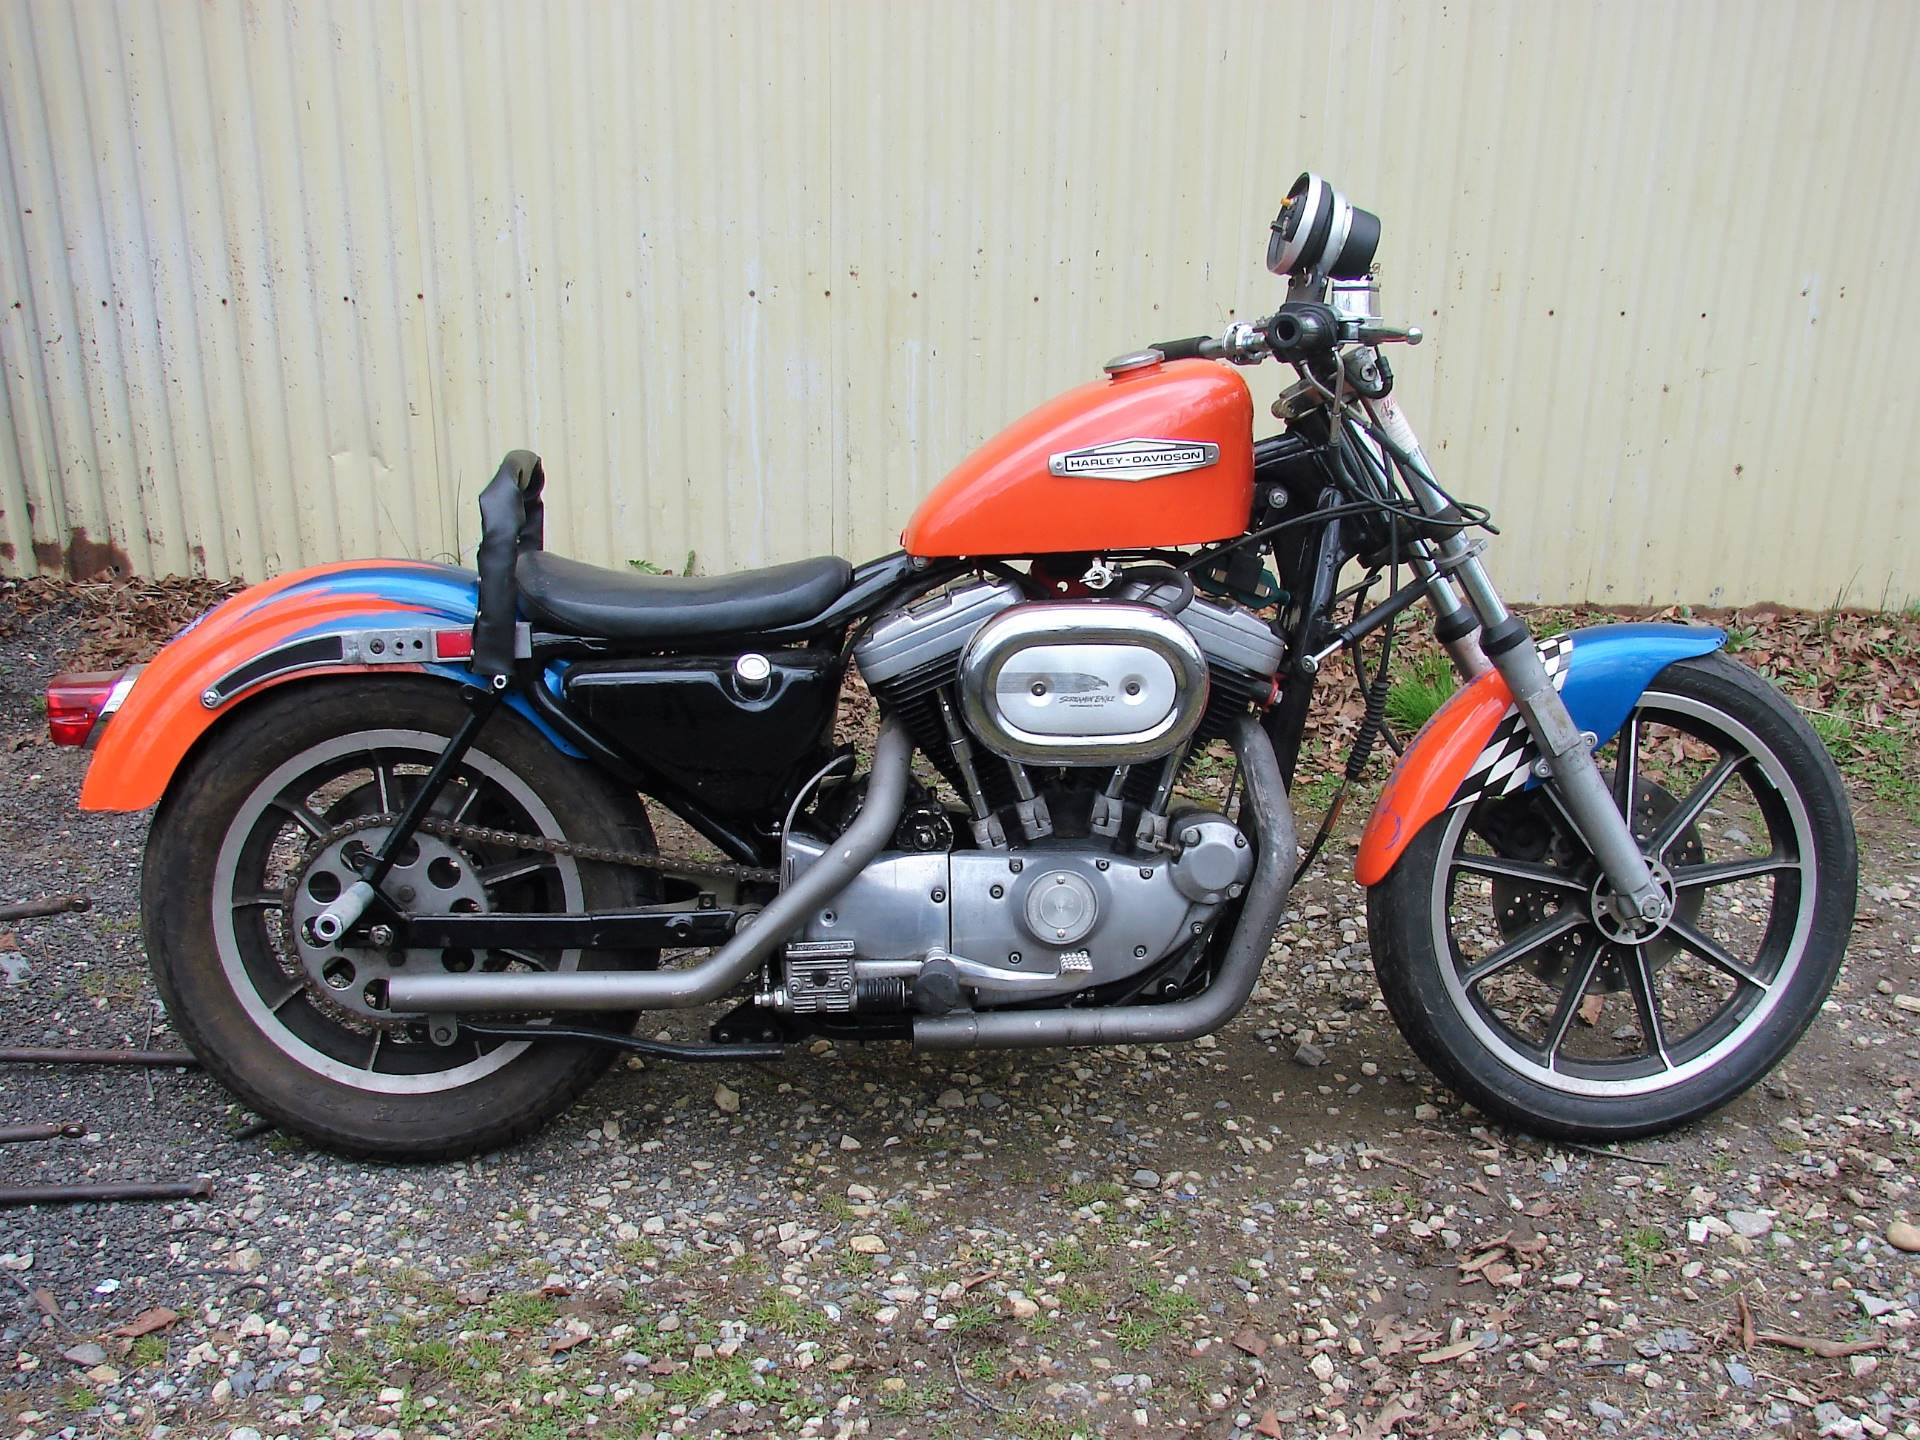 Used 1988 Harley Davidson 1200 Xl Sportster Modified Racing Drag Bike Motorcycles In Williamstown Nj 7 4 20 04 Orange